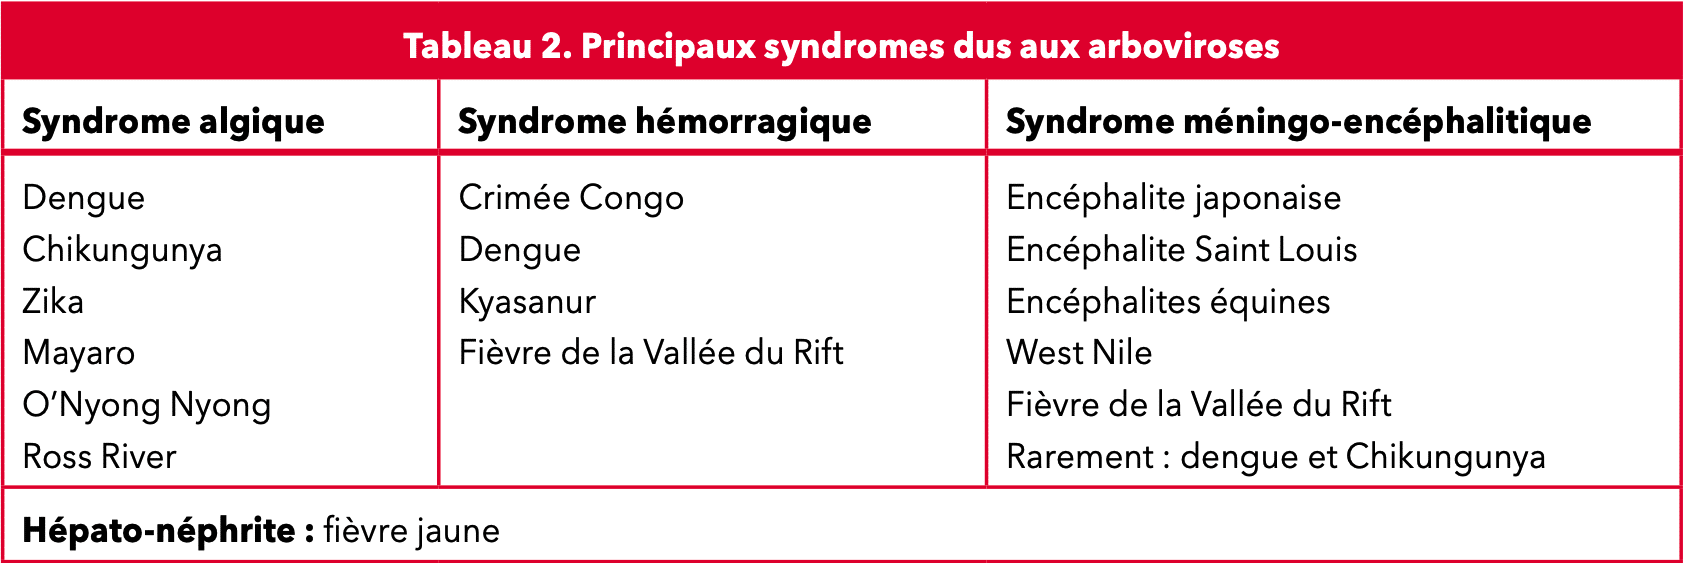 Tableau 2 : Principaux syndromes dus aux arboviroses. Source : ePilly Trop 2022.